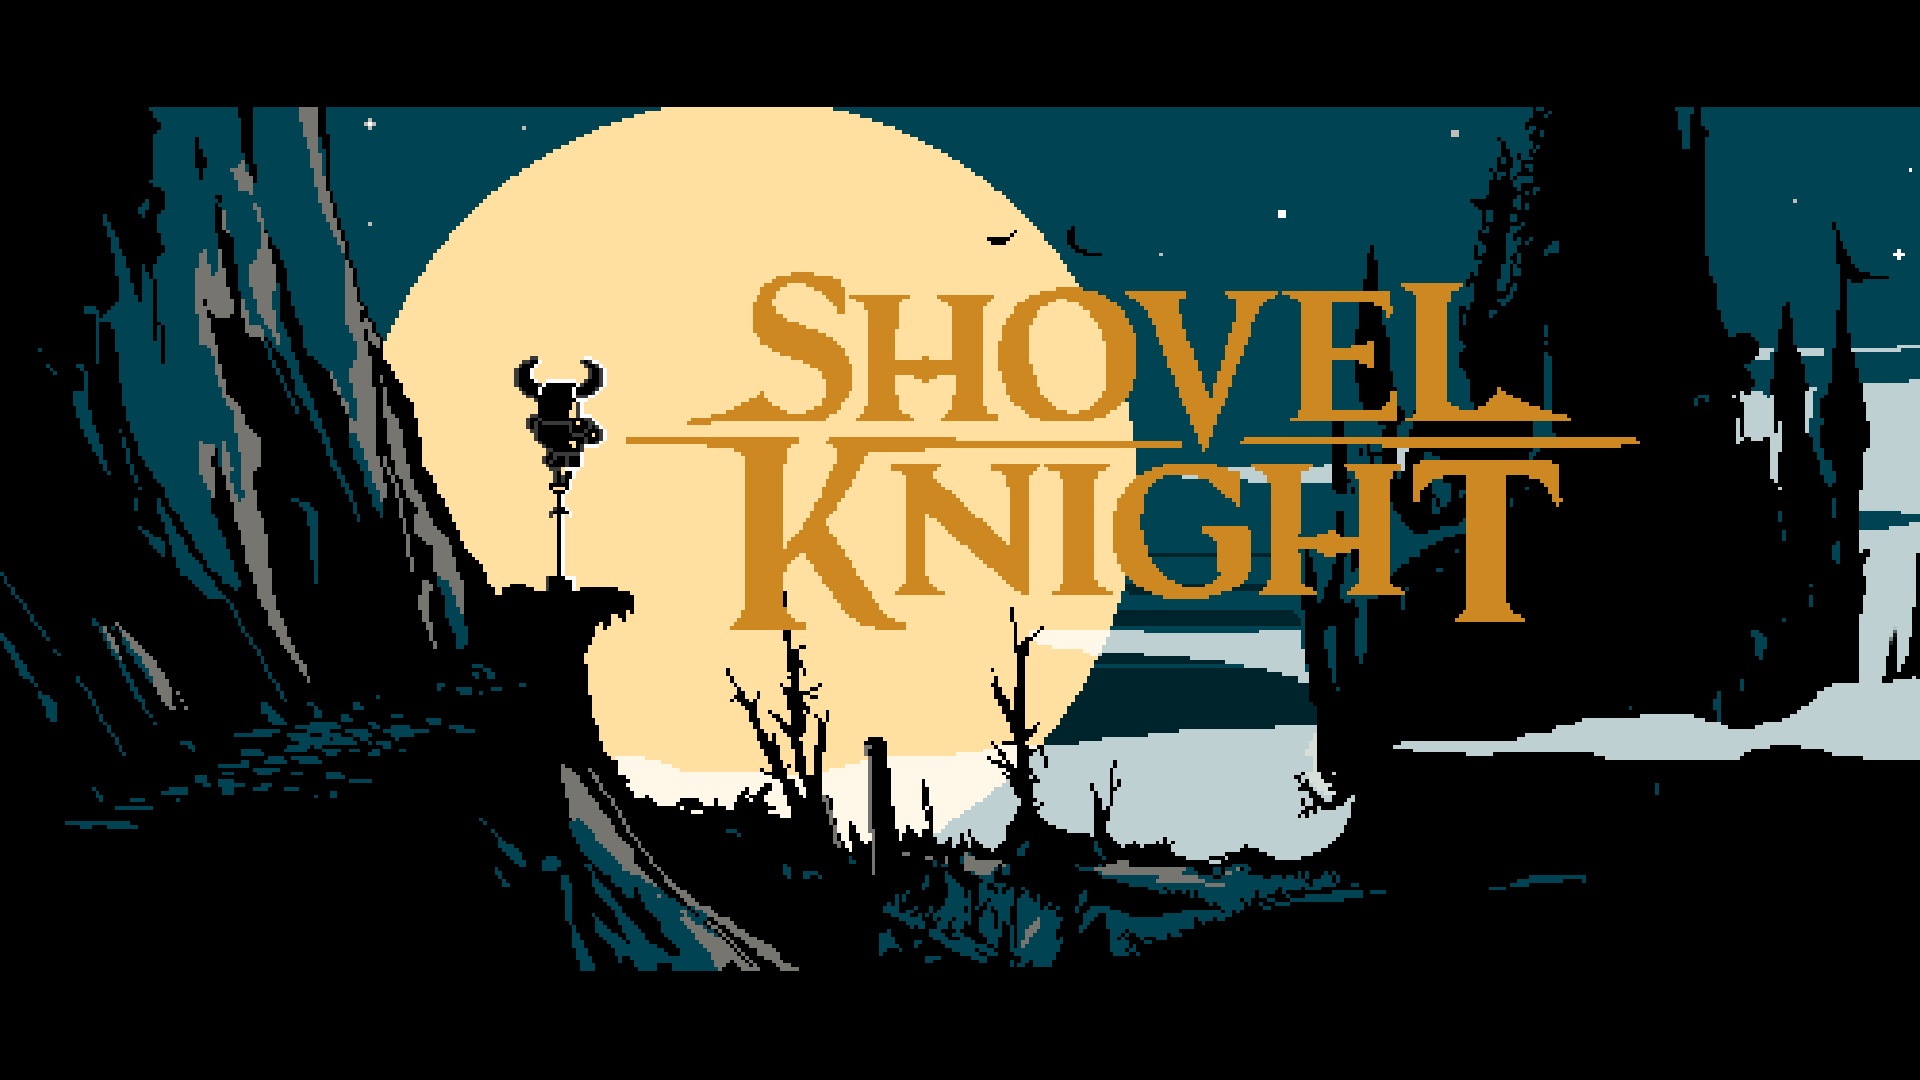 wallpapers from shovel knight gamepressure com